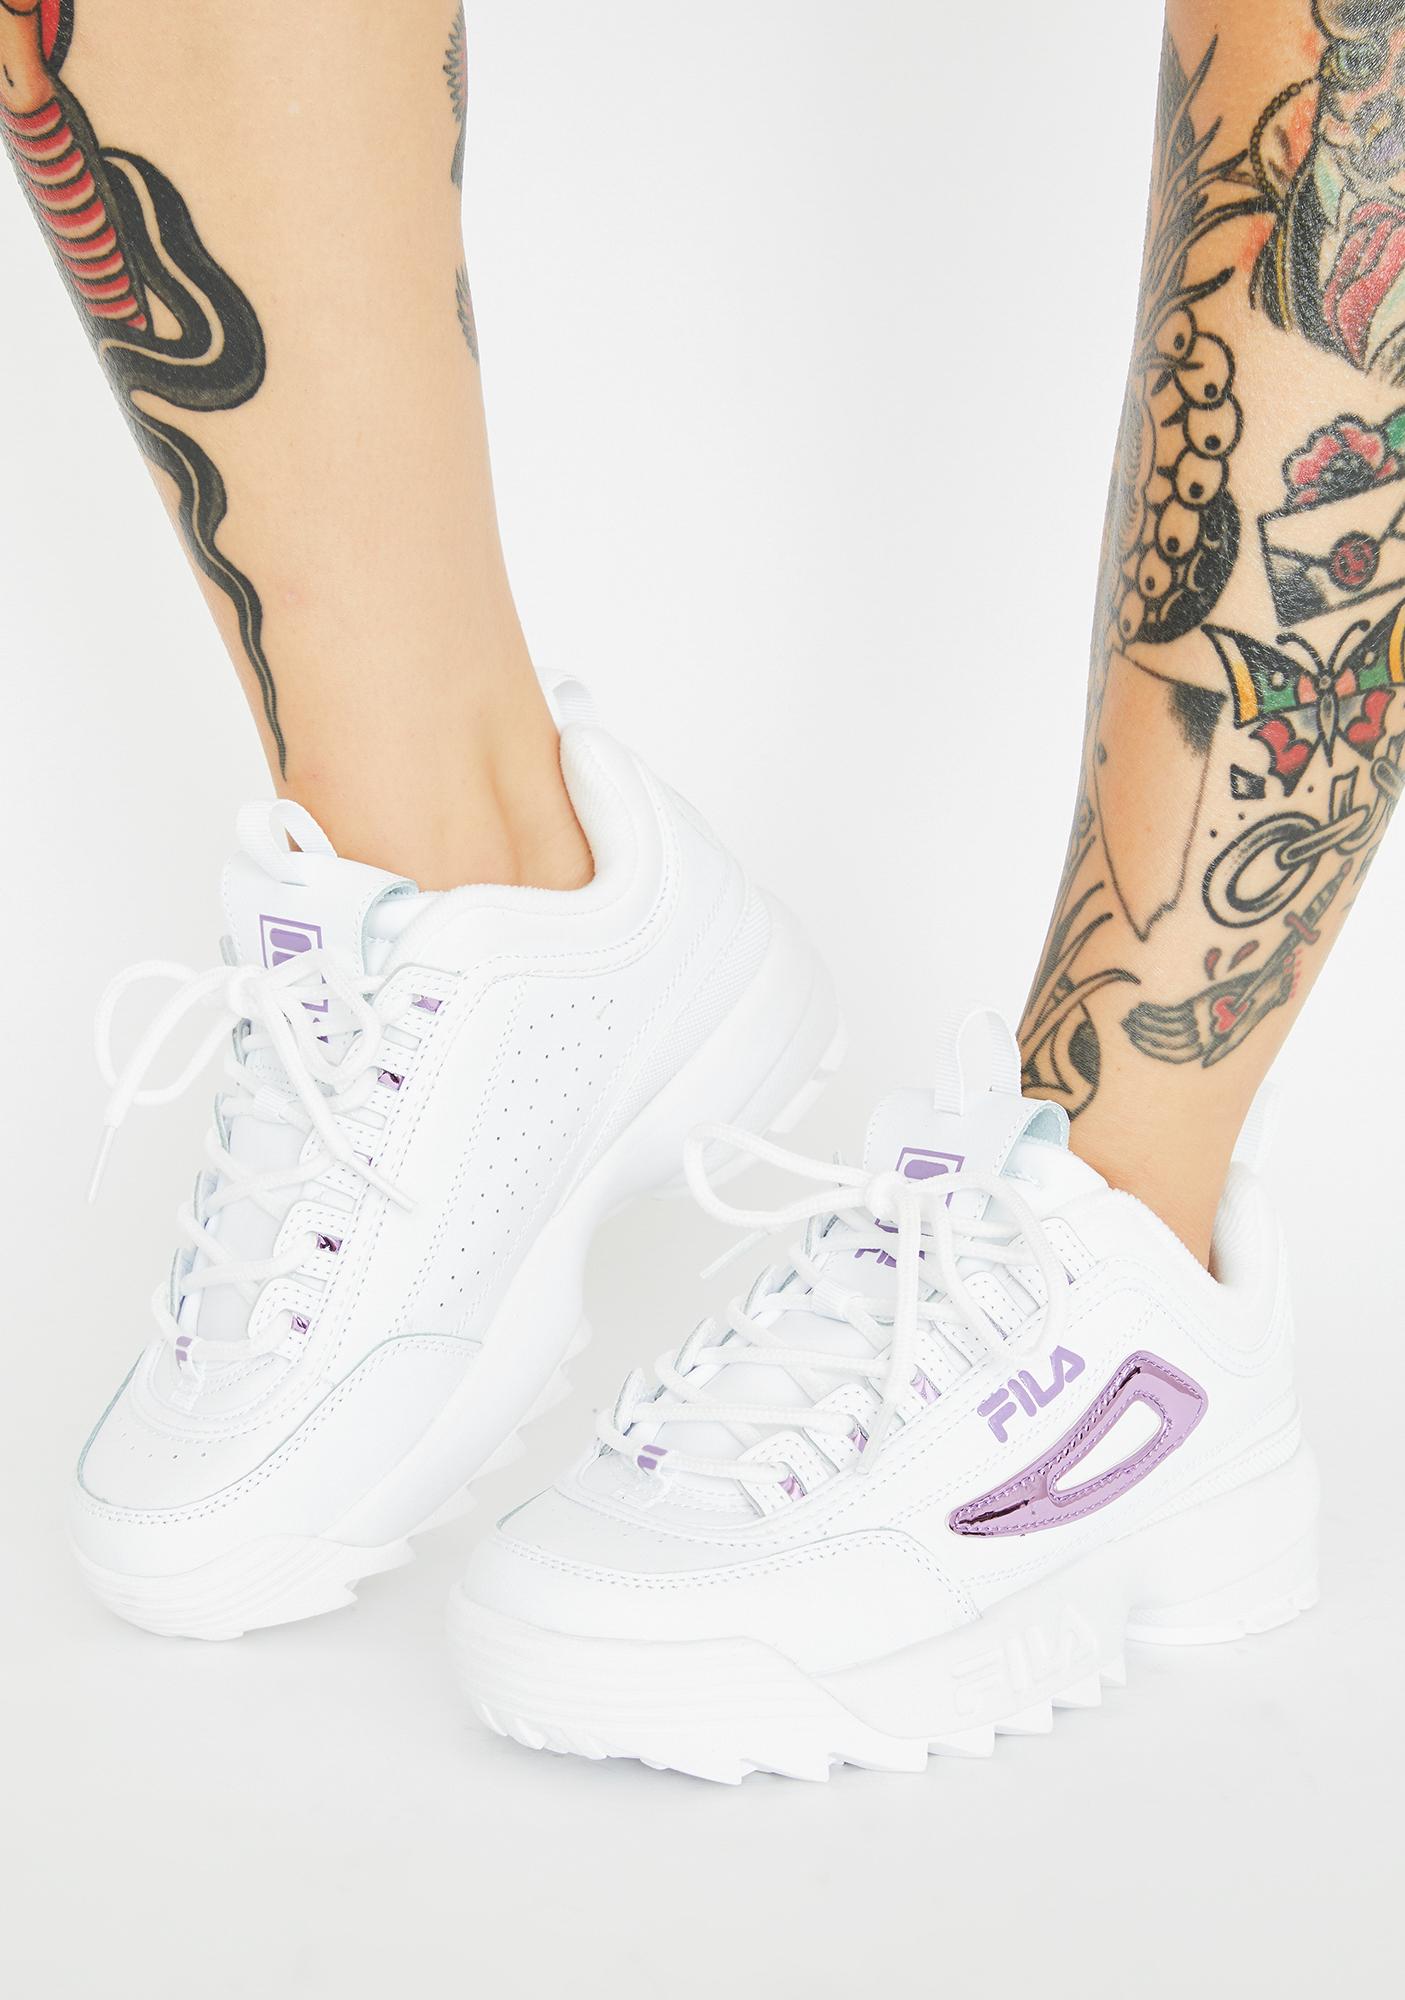 lavender fila sneakers